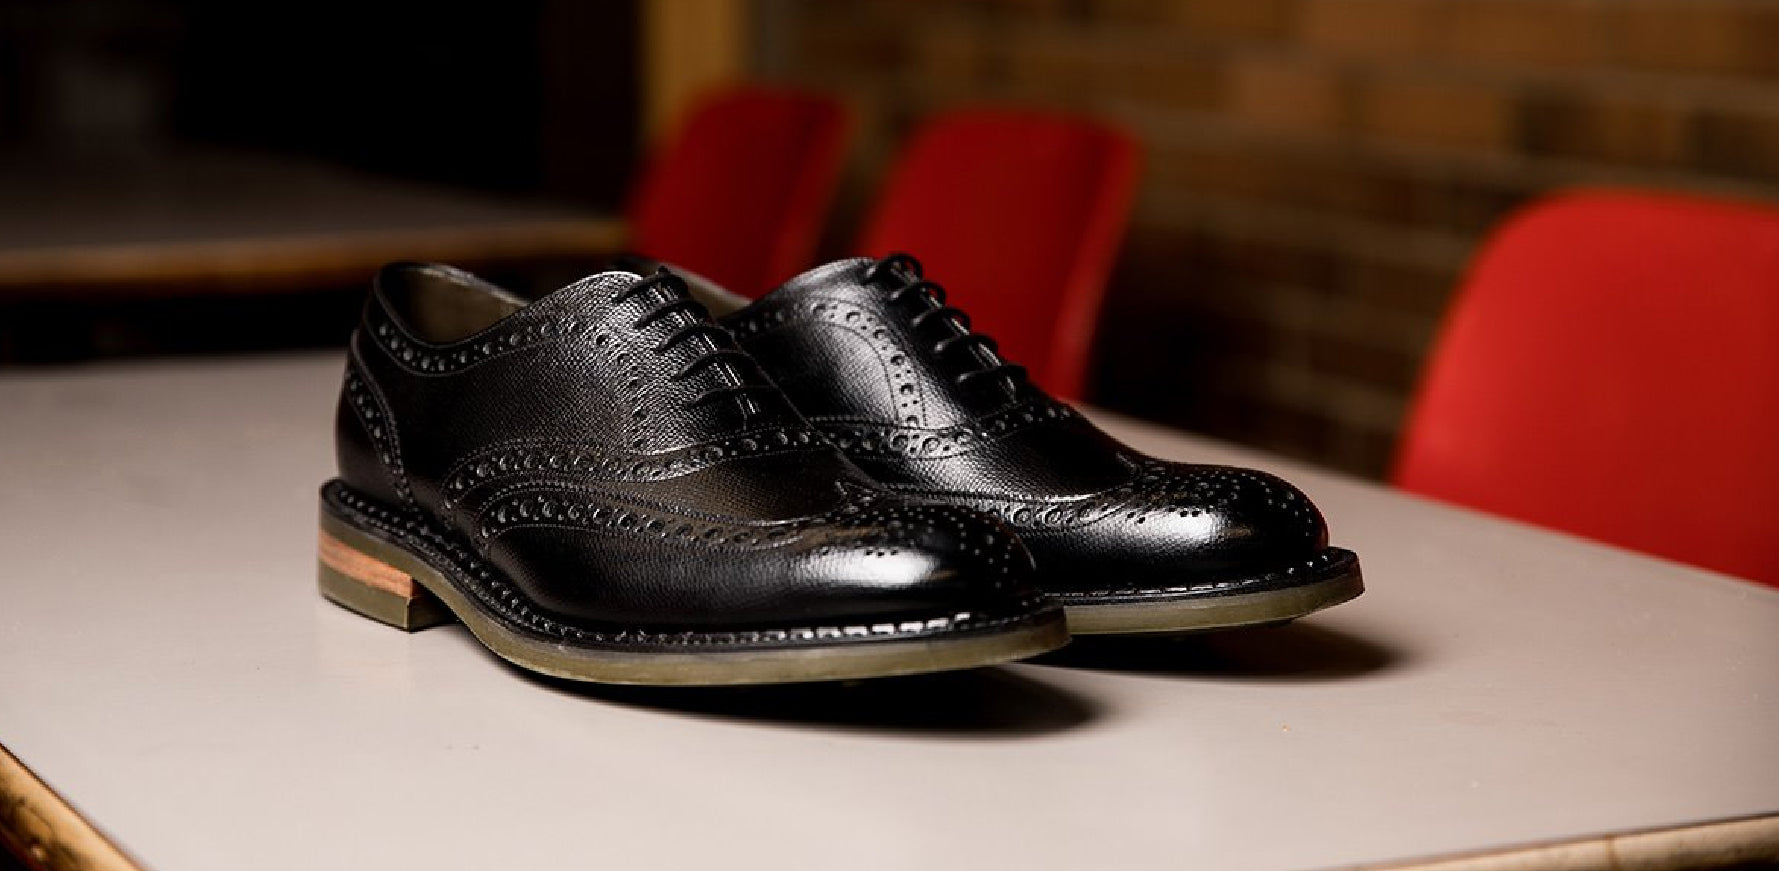 Station - Men's Black Leather Brogue Shoe By Barker